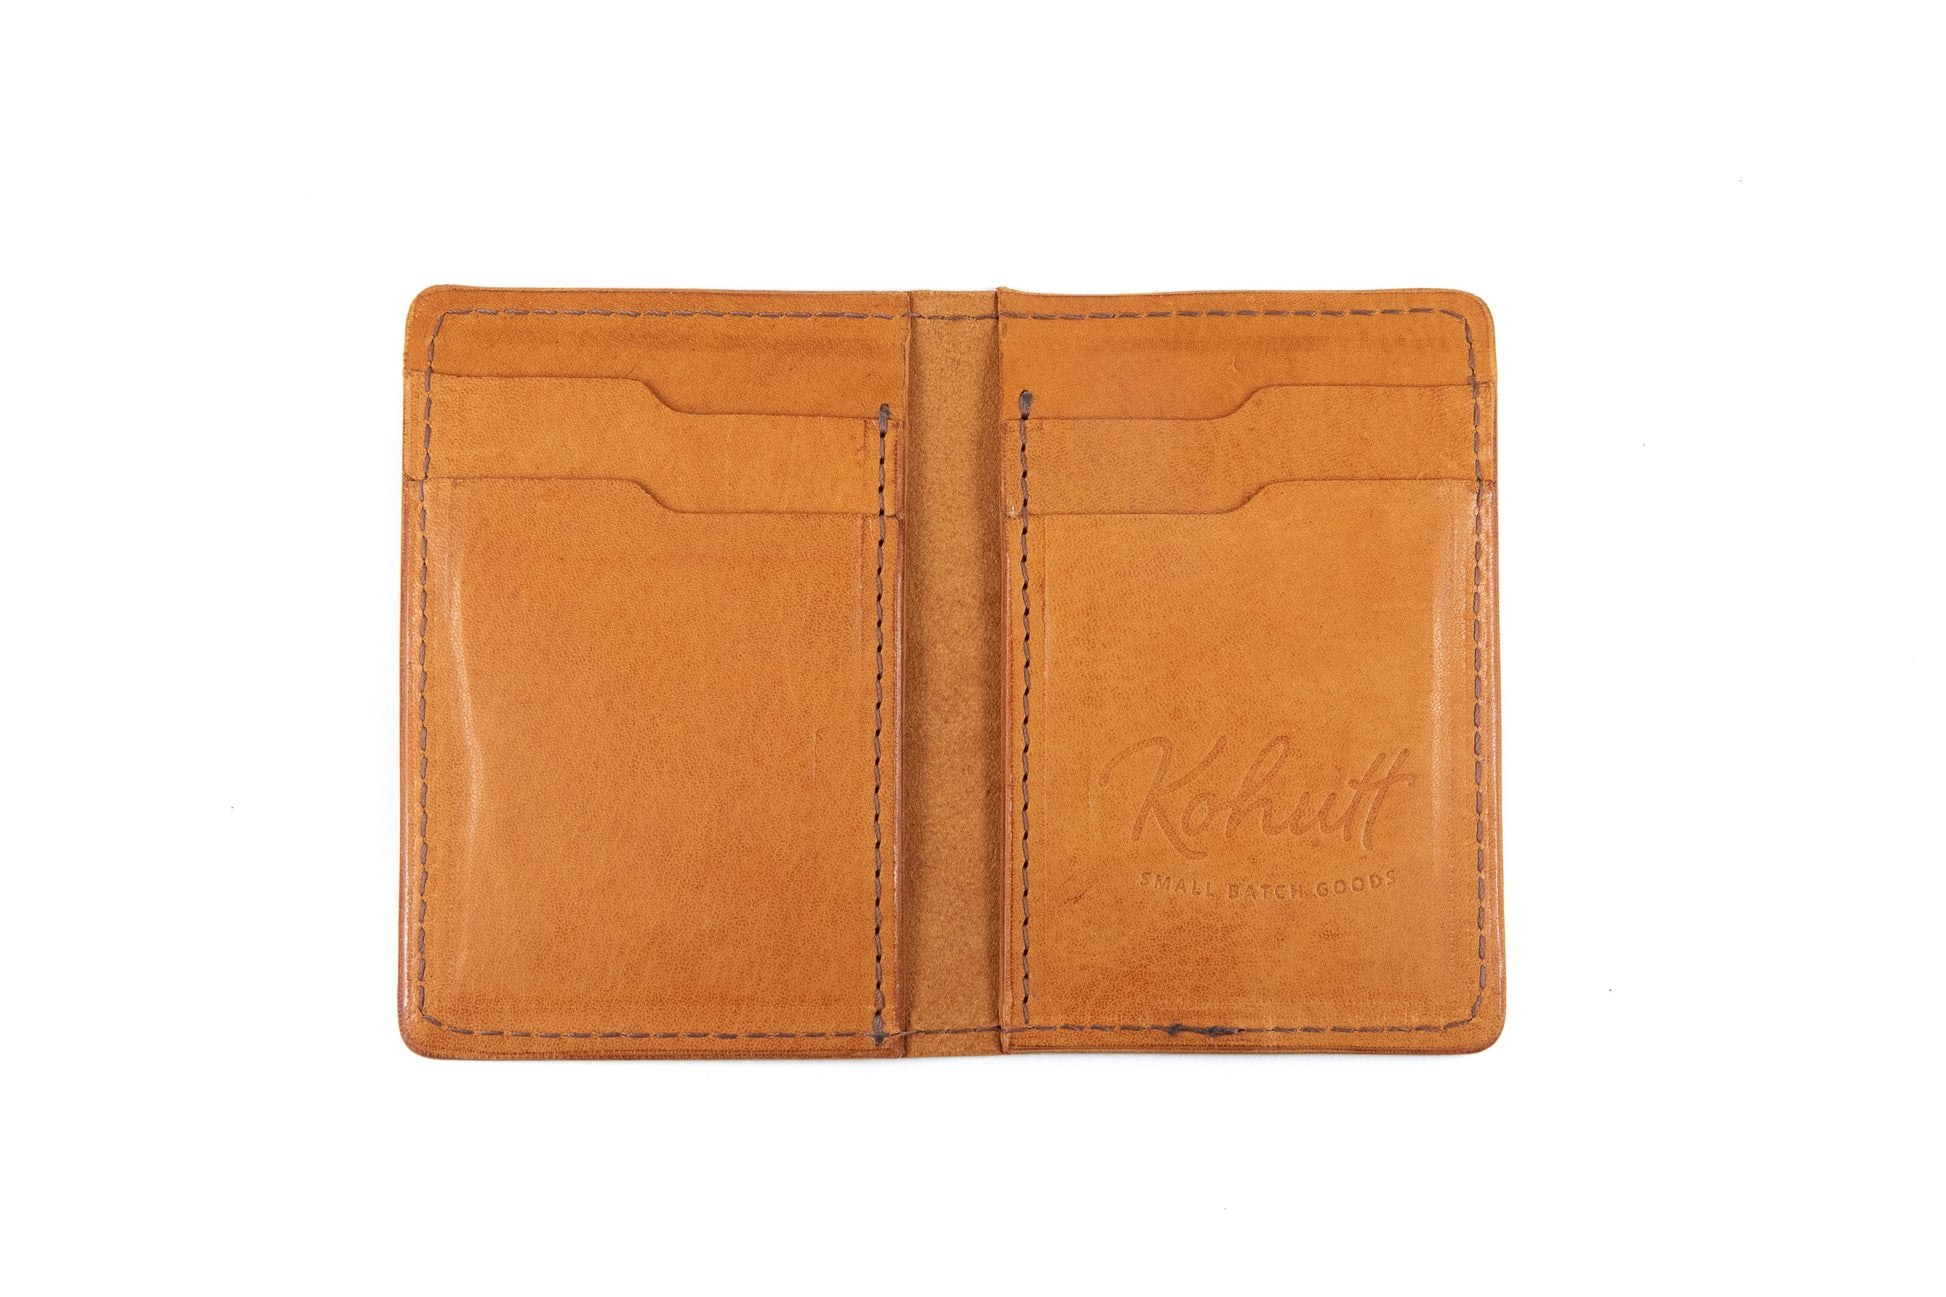 Classic vertical bifold slim wallet in caramel Kangaroo leather - Kohutt™ - made in Tasmania